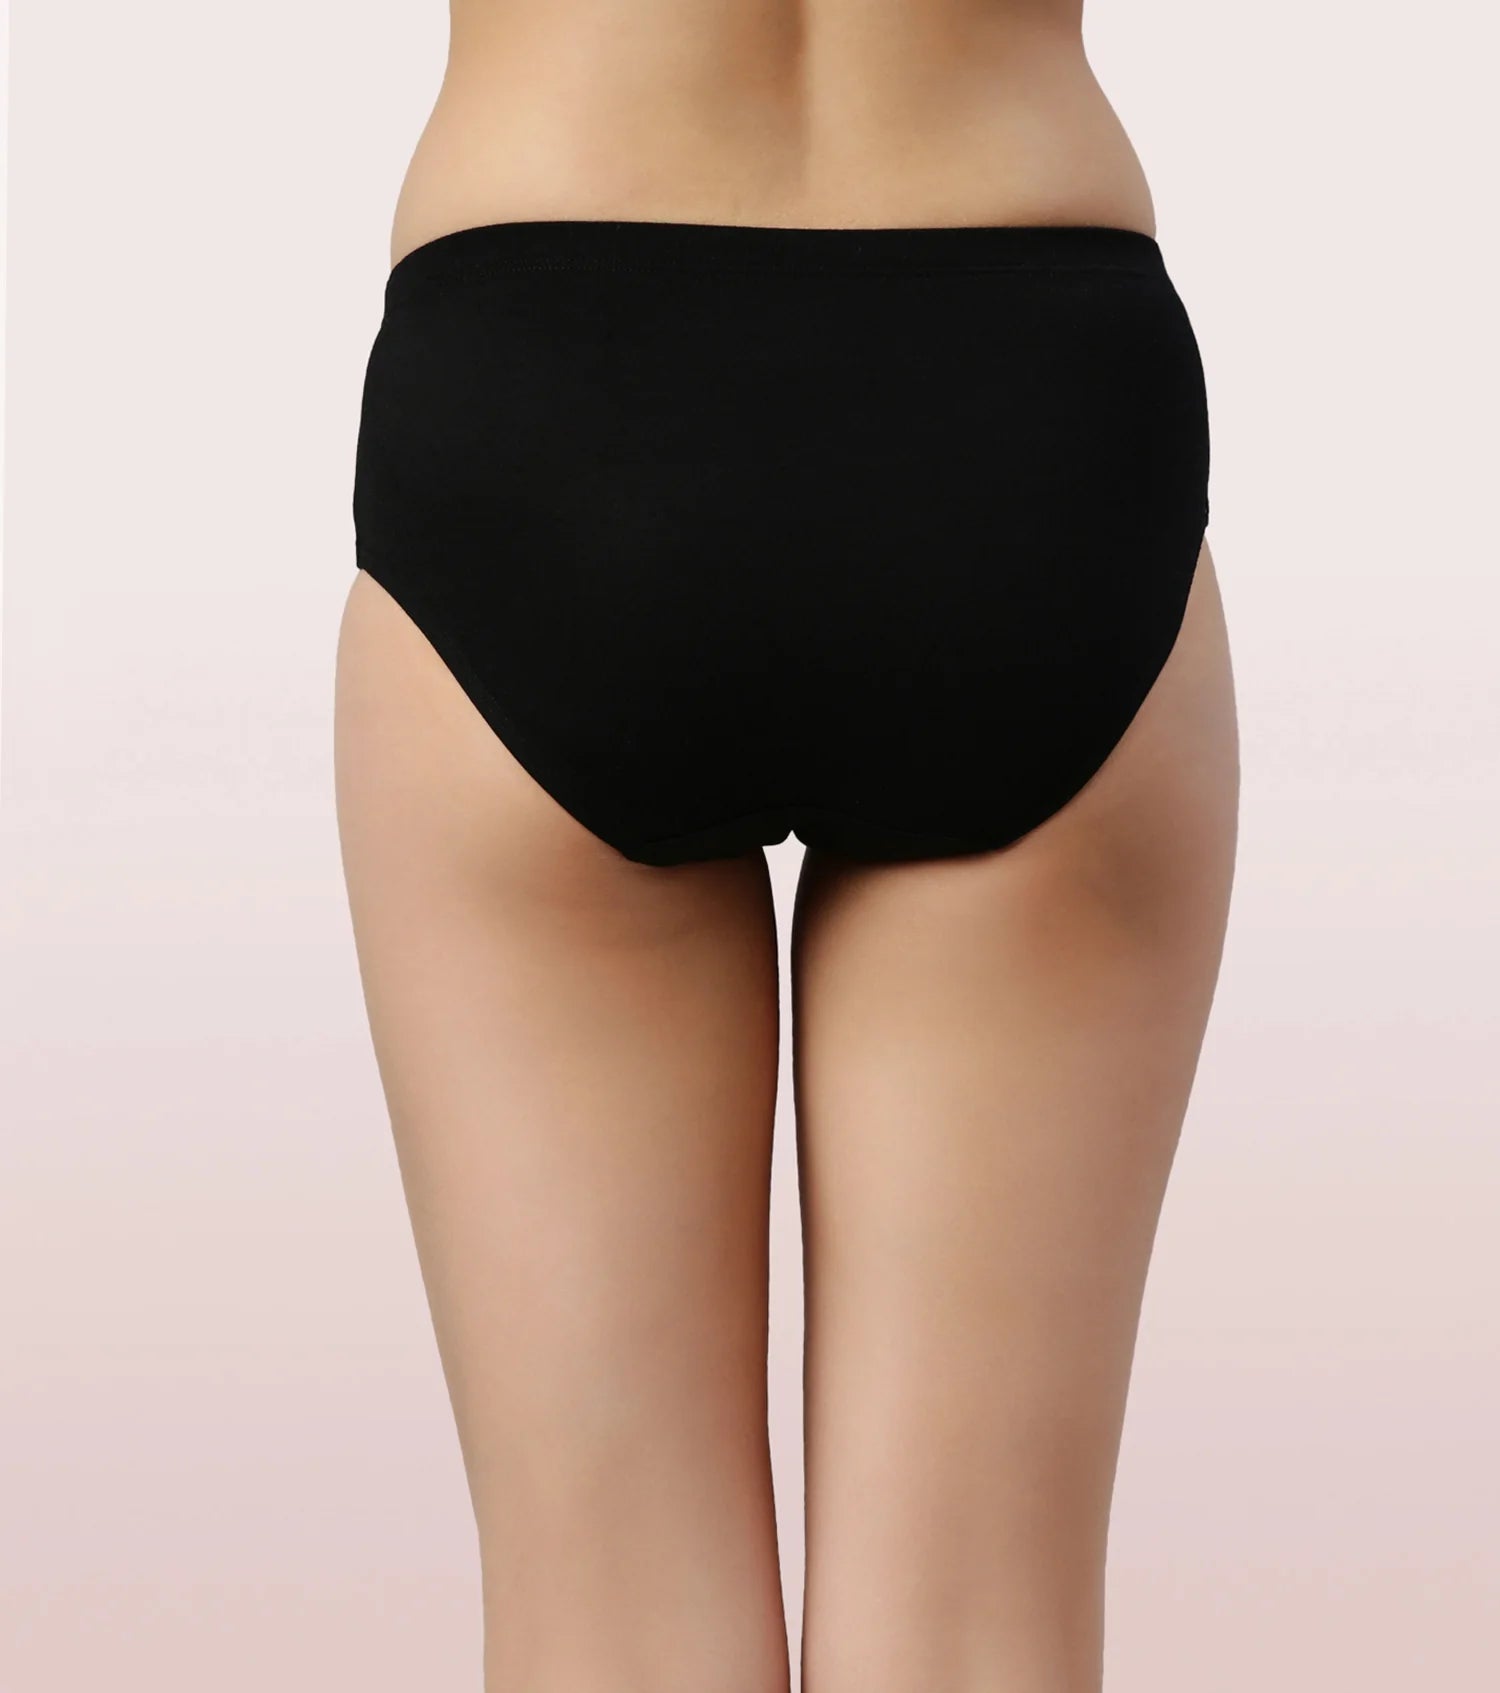 Buy Underwear/women Spandex Underwear/ Black Spandex Panty/french Cut Panty/  4ways Stretch Spandex Panty/high Cut Pantty Online in India 